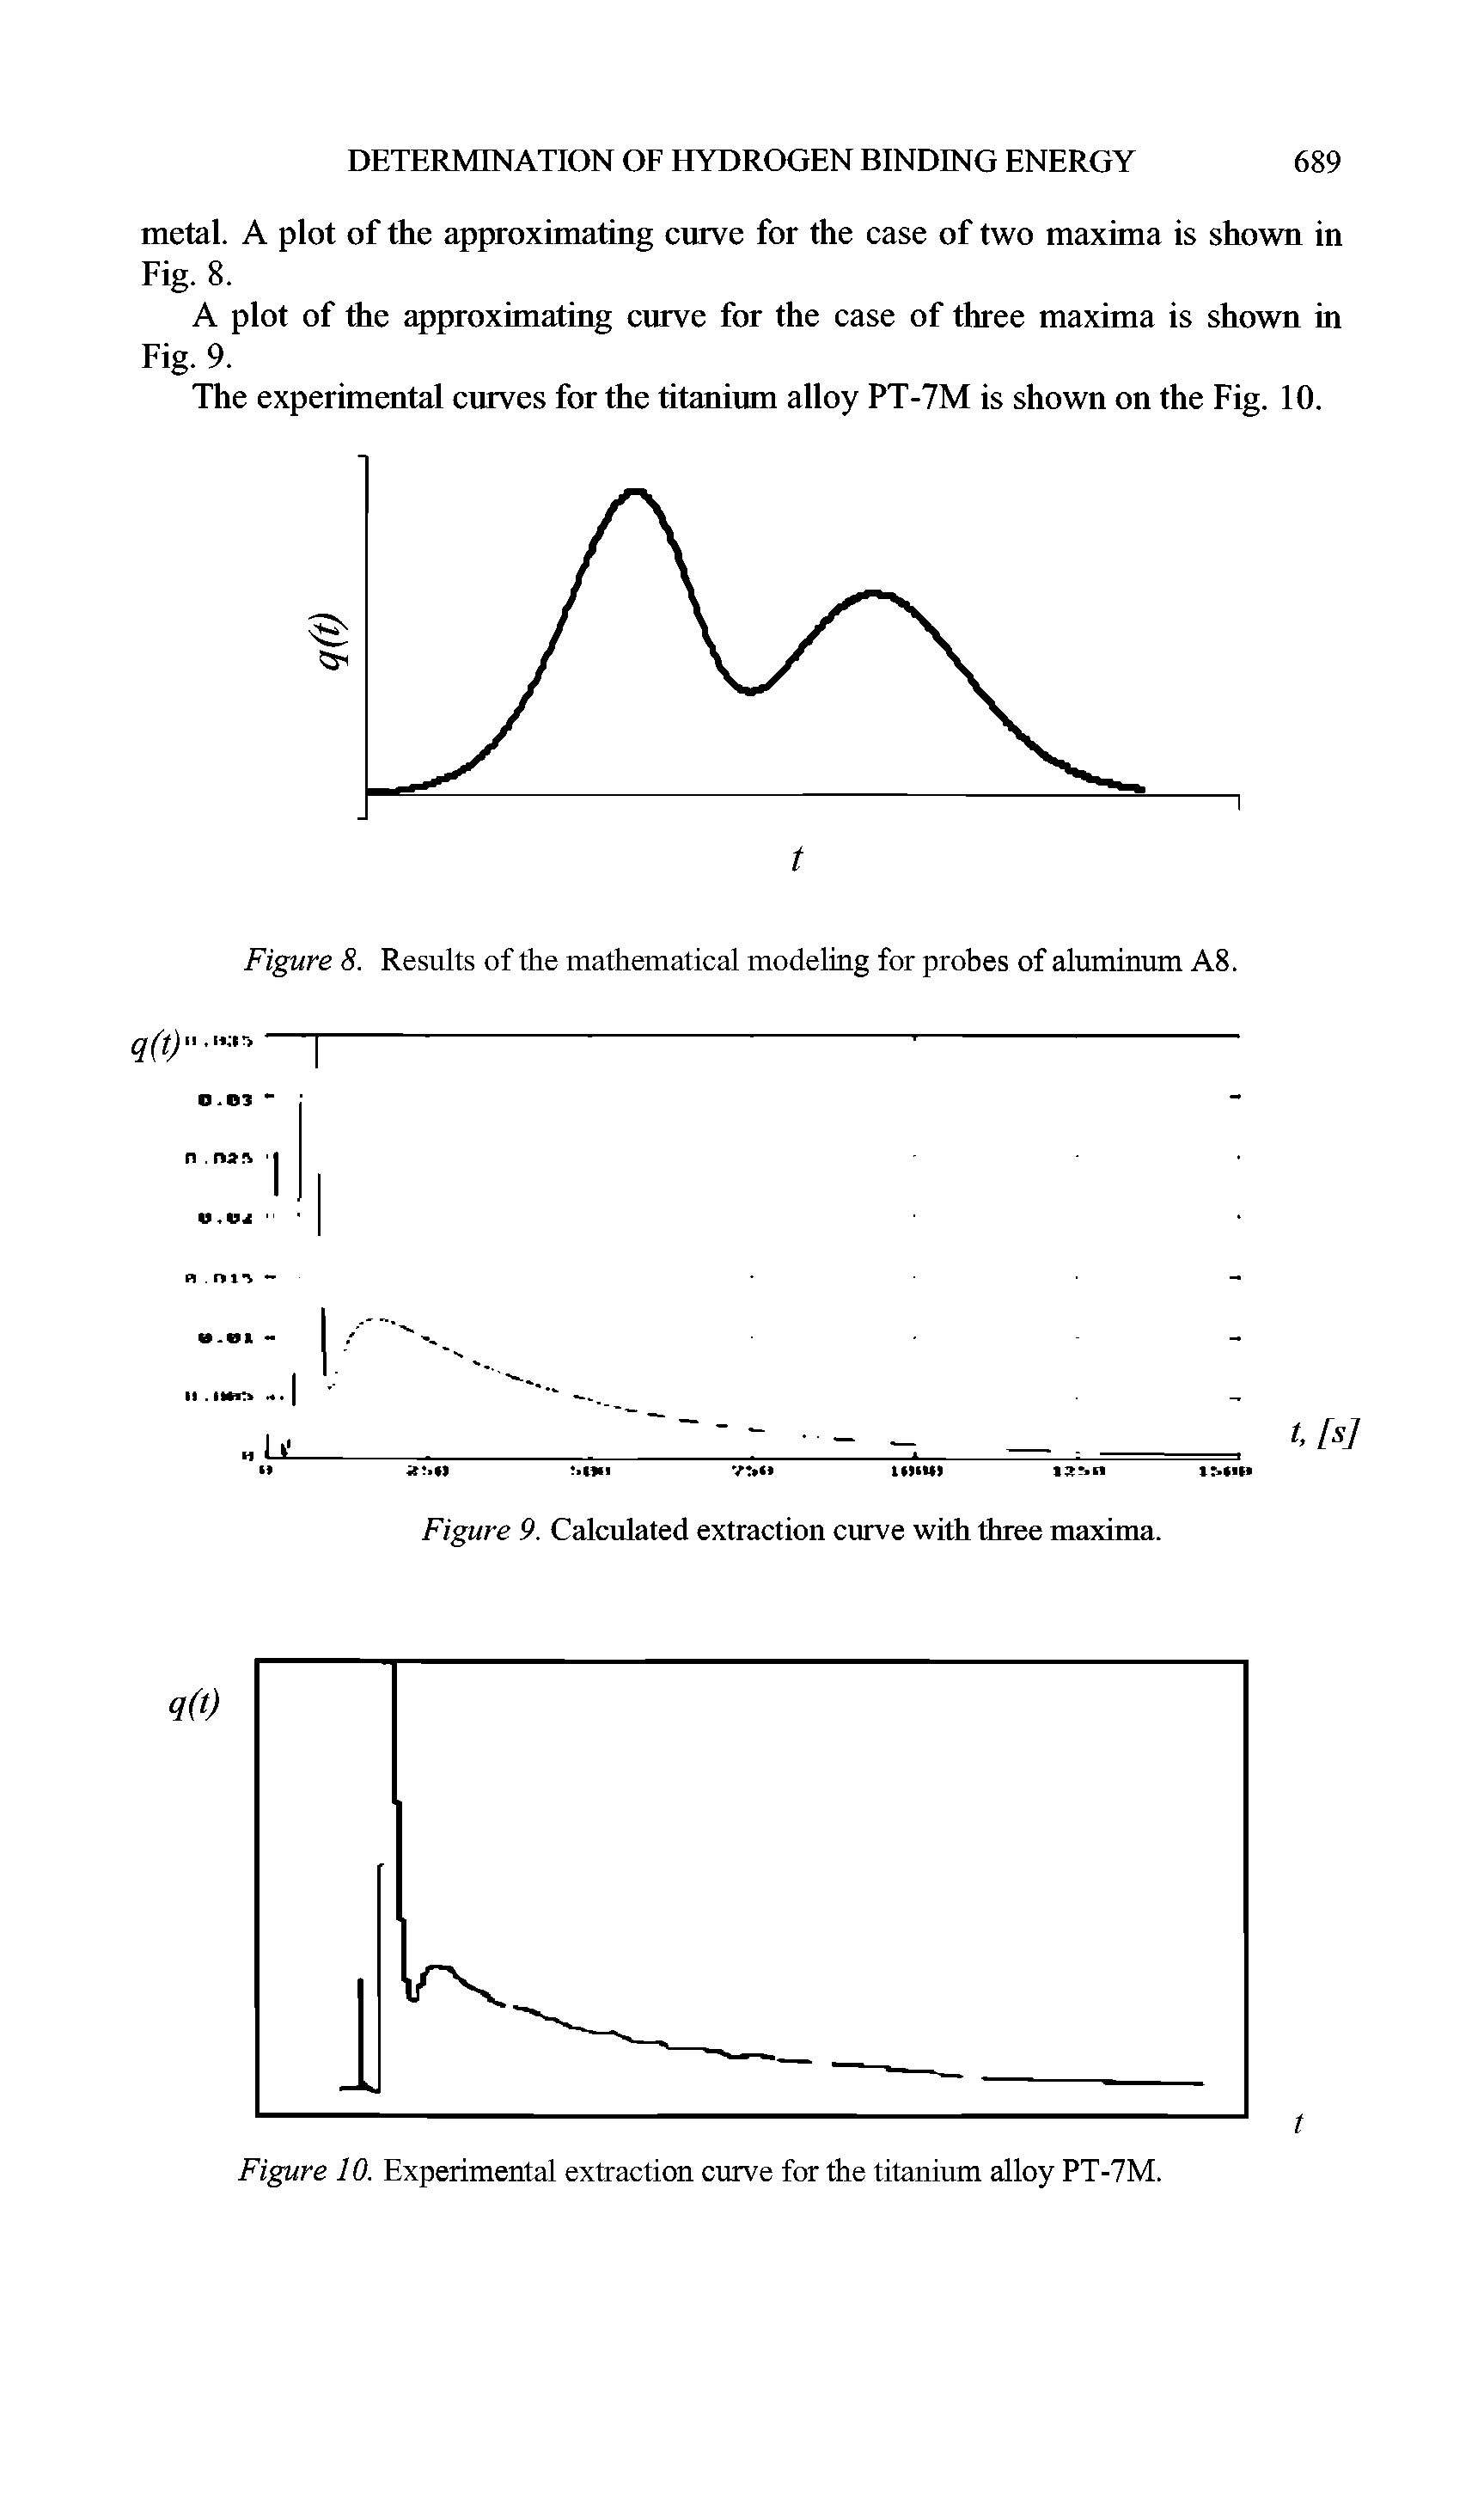 Figure 10. Experimental extraction curve for the titanium alloy PT-7M.